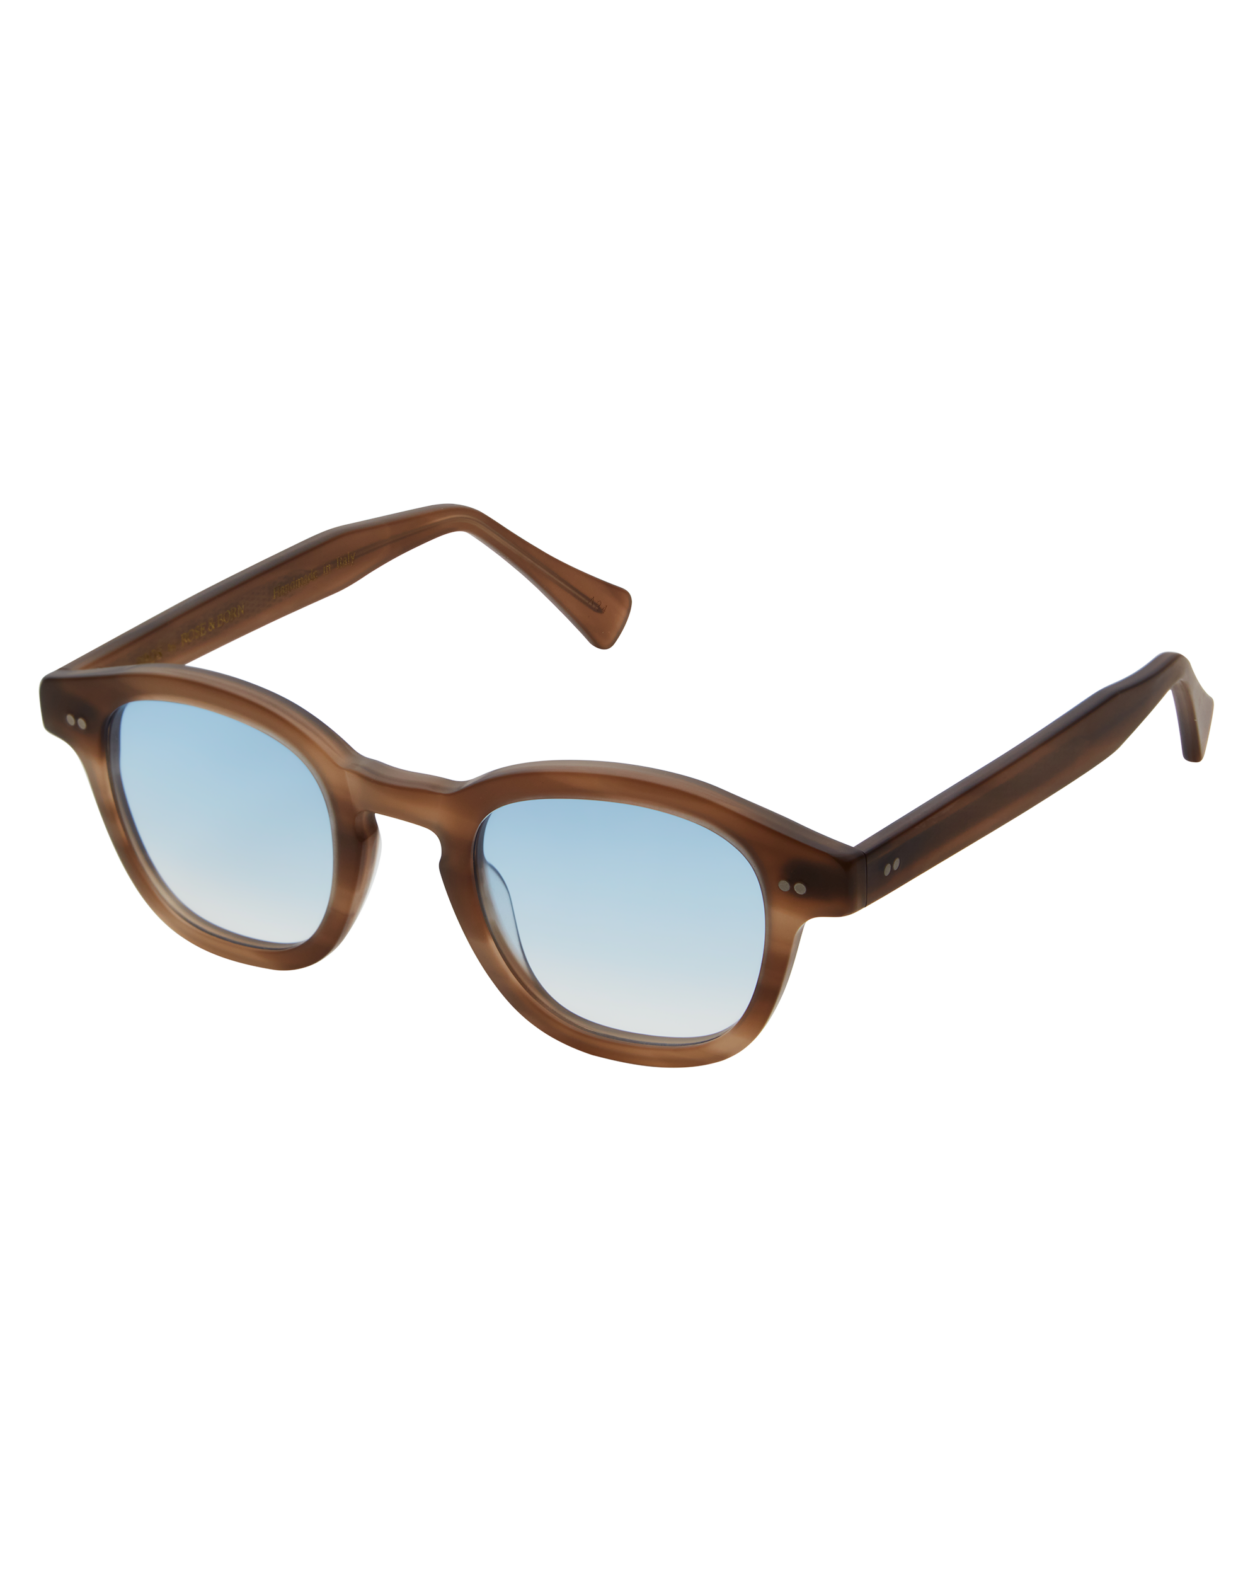 Sunglasses Light Brown